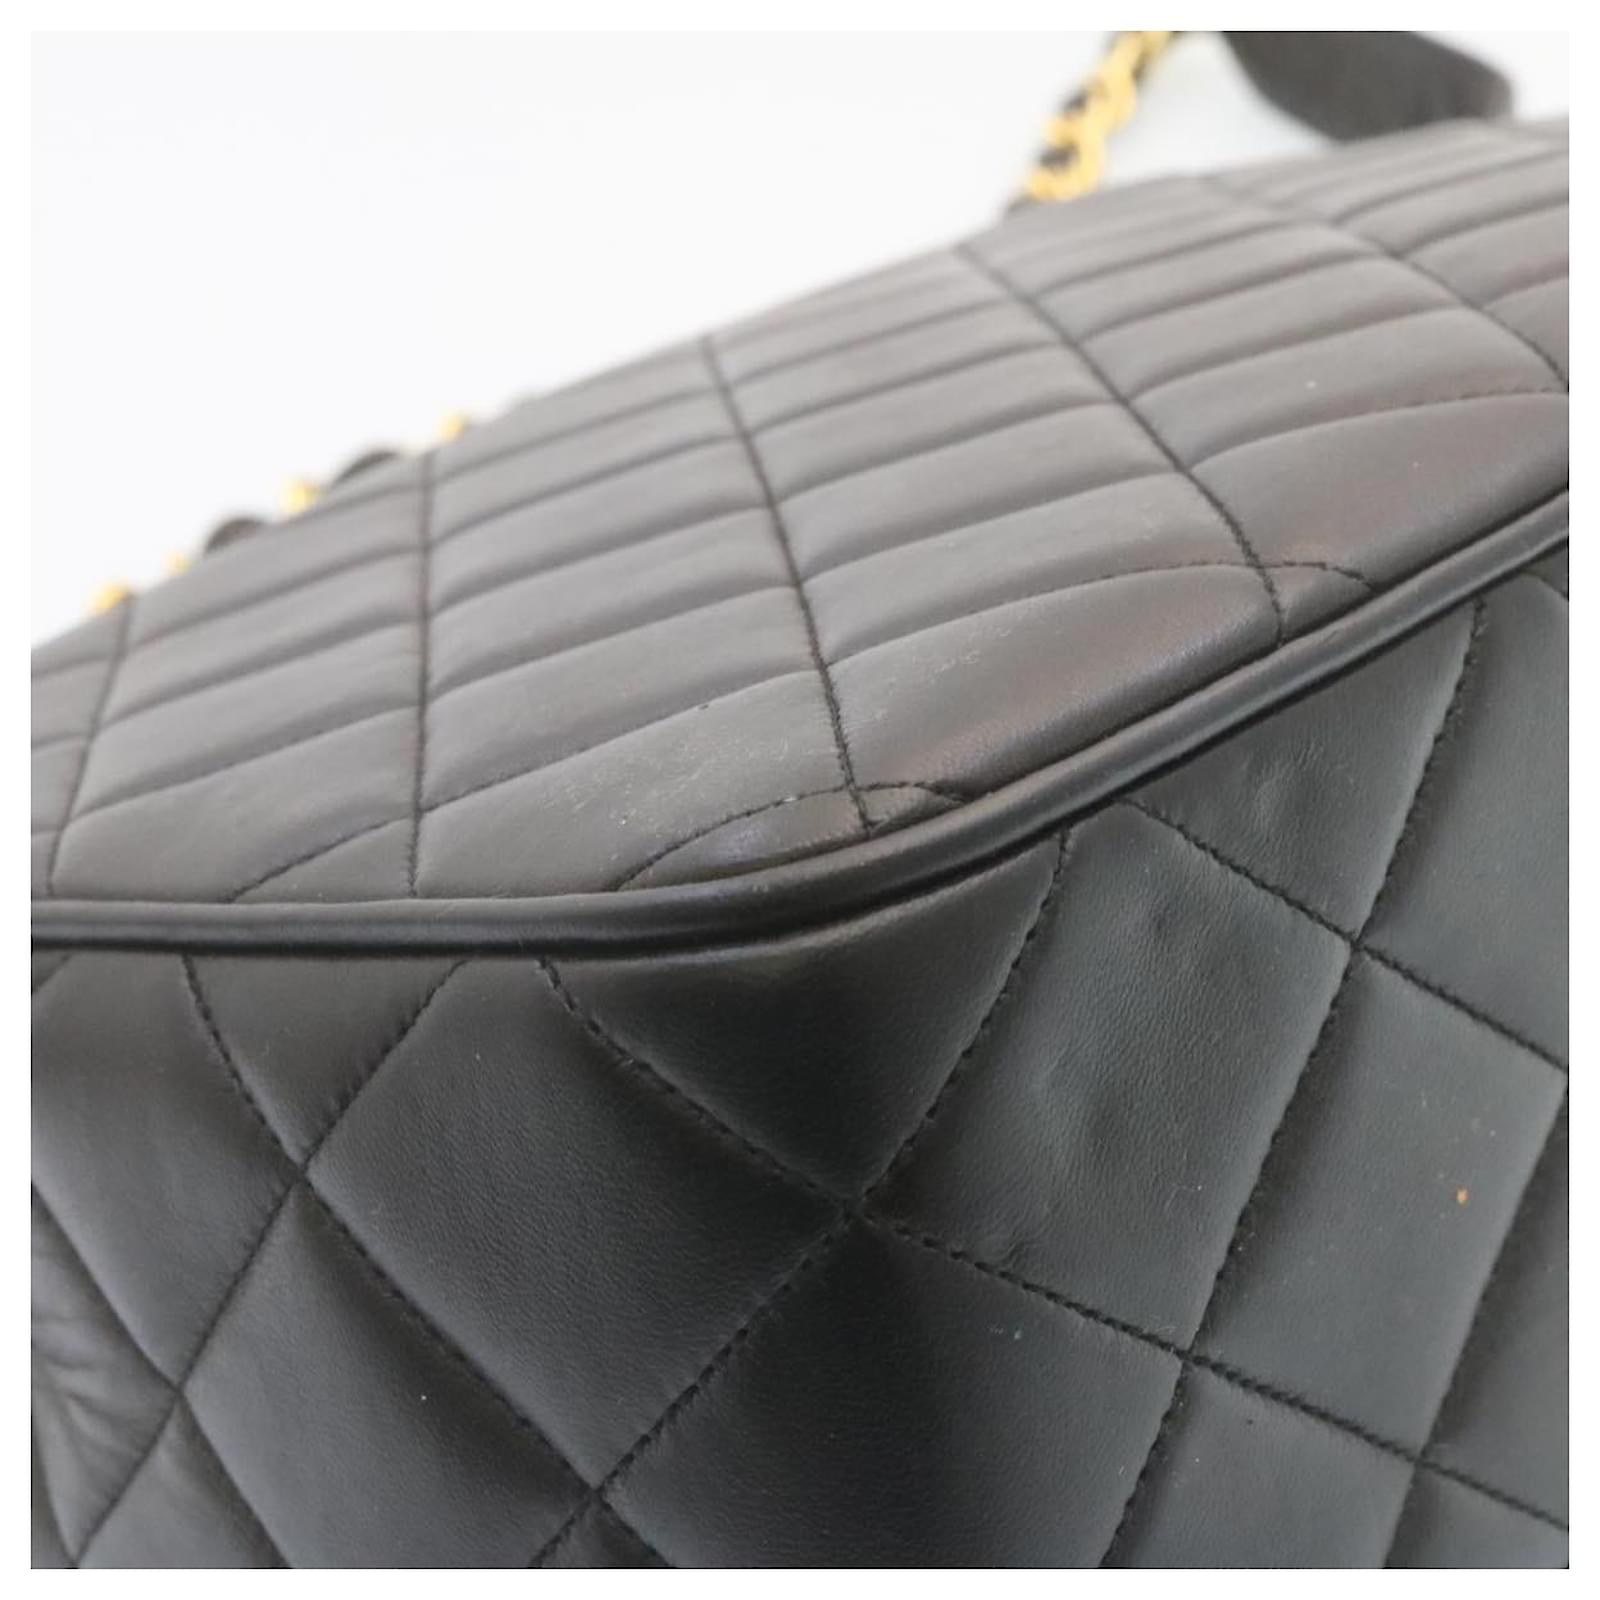 CHANEL Matelasse Chain Flap Shoulder Bag Lamb Skin Black Gold CC